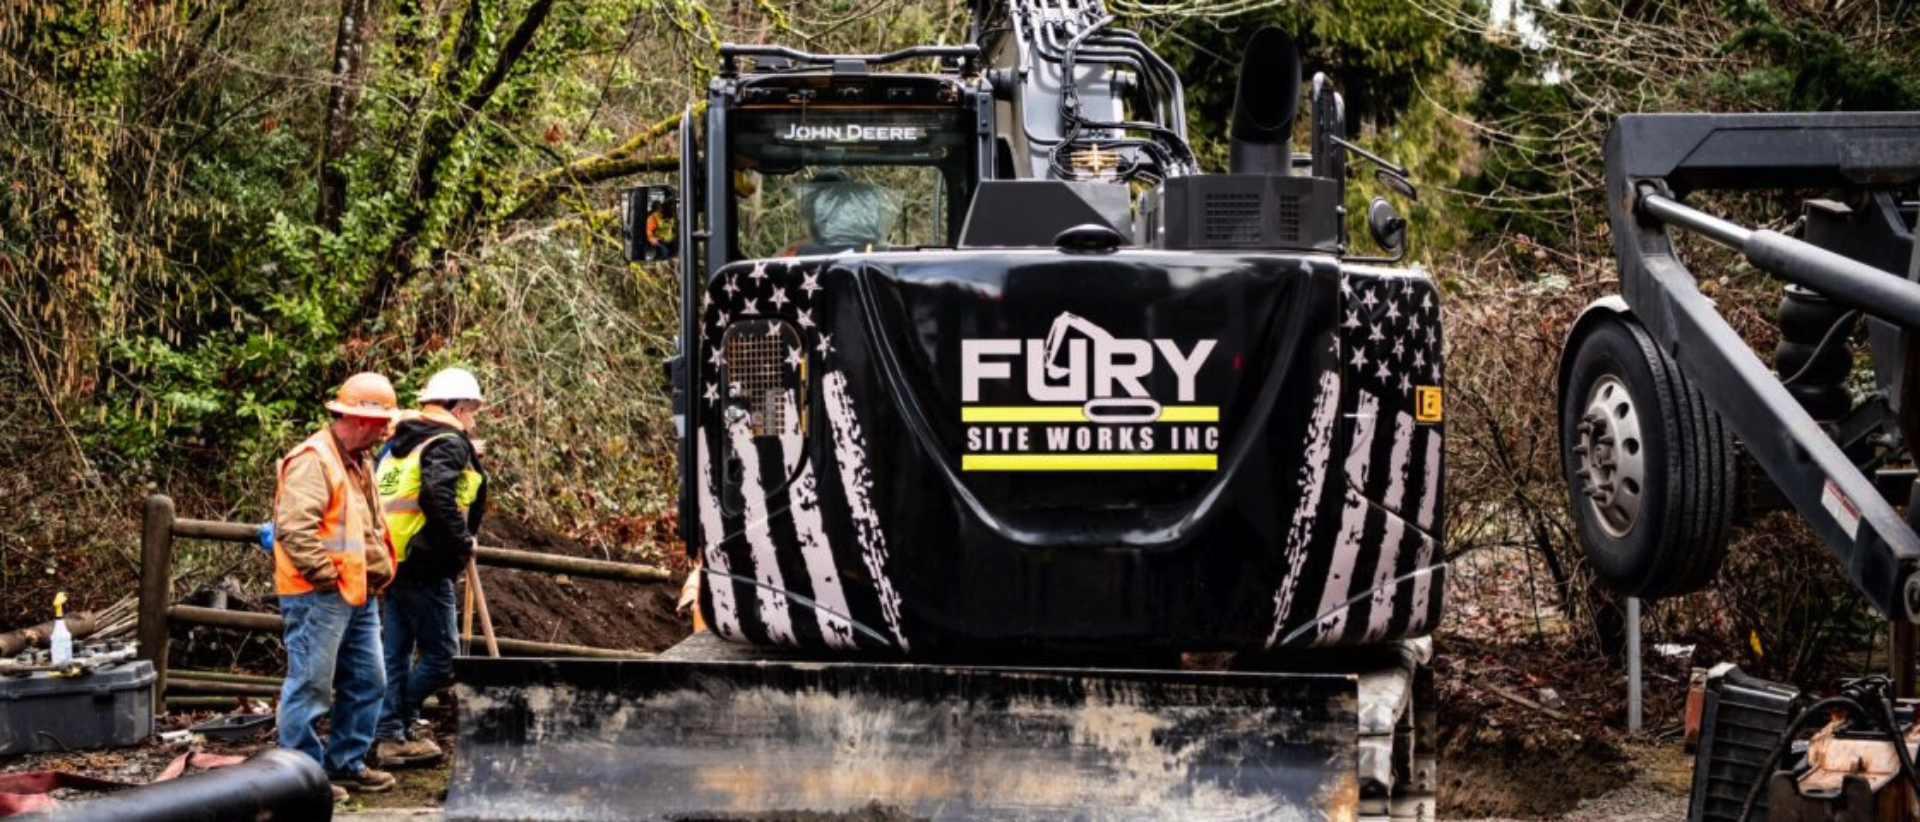 Fury Site Works